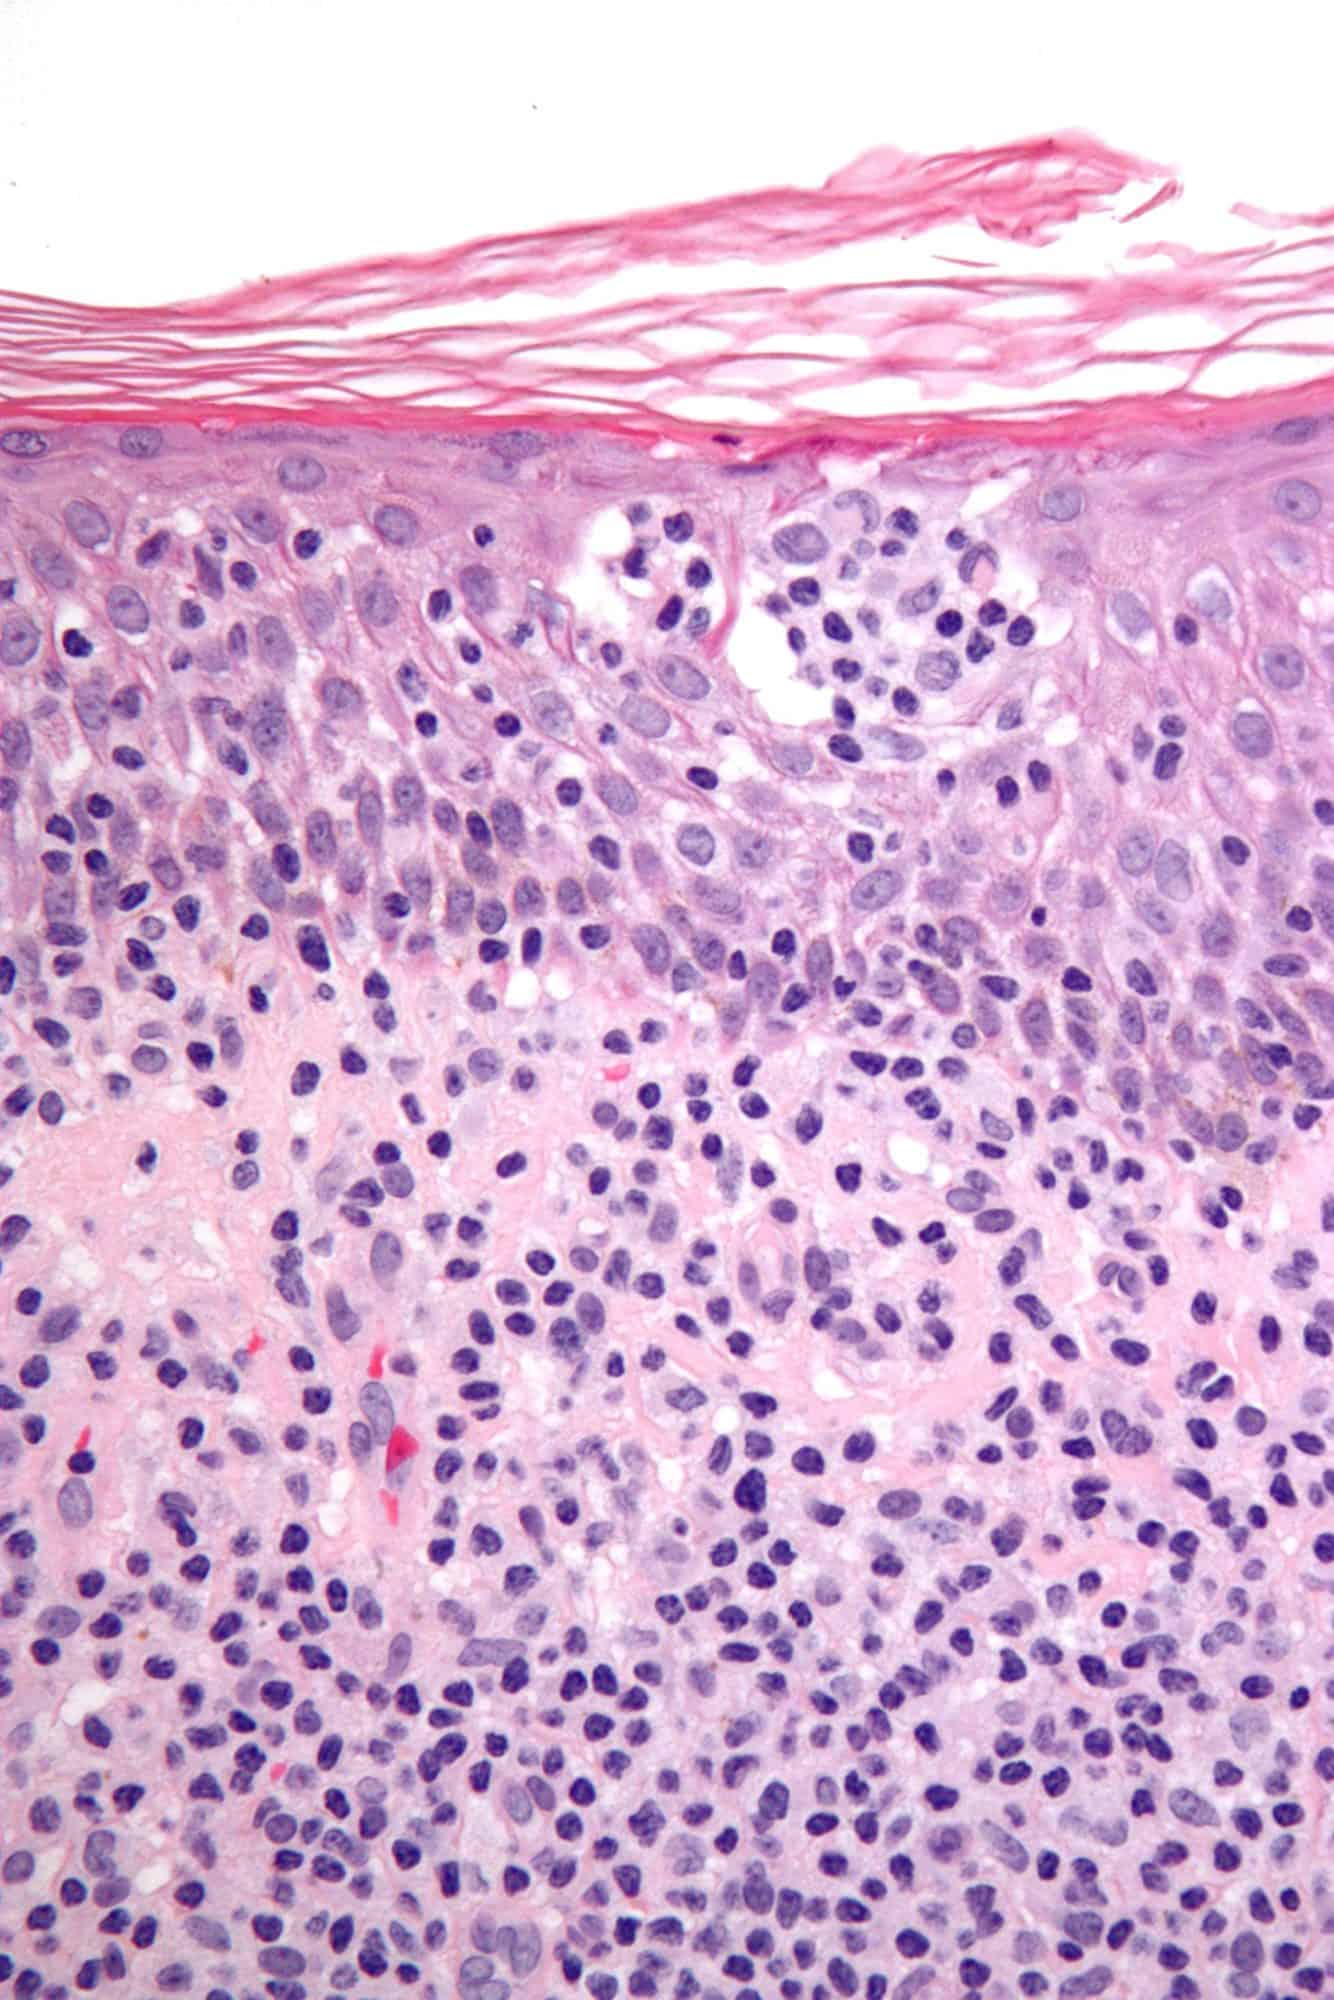 Cutaneous T-Cell Lymphomas